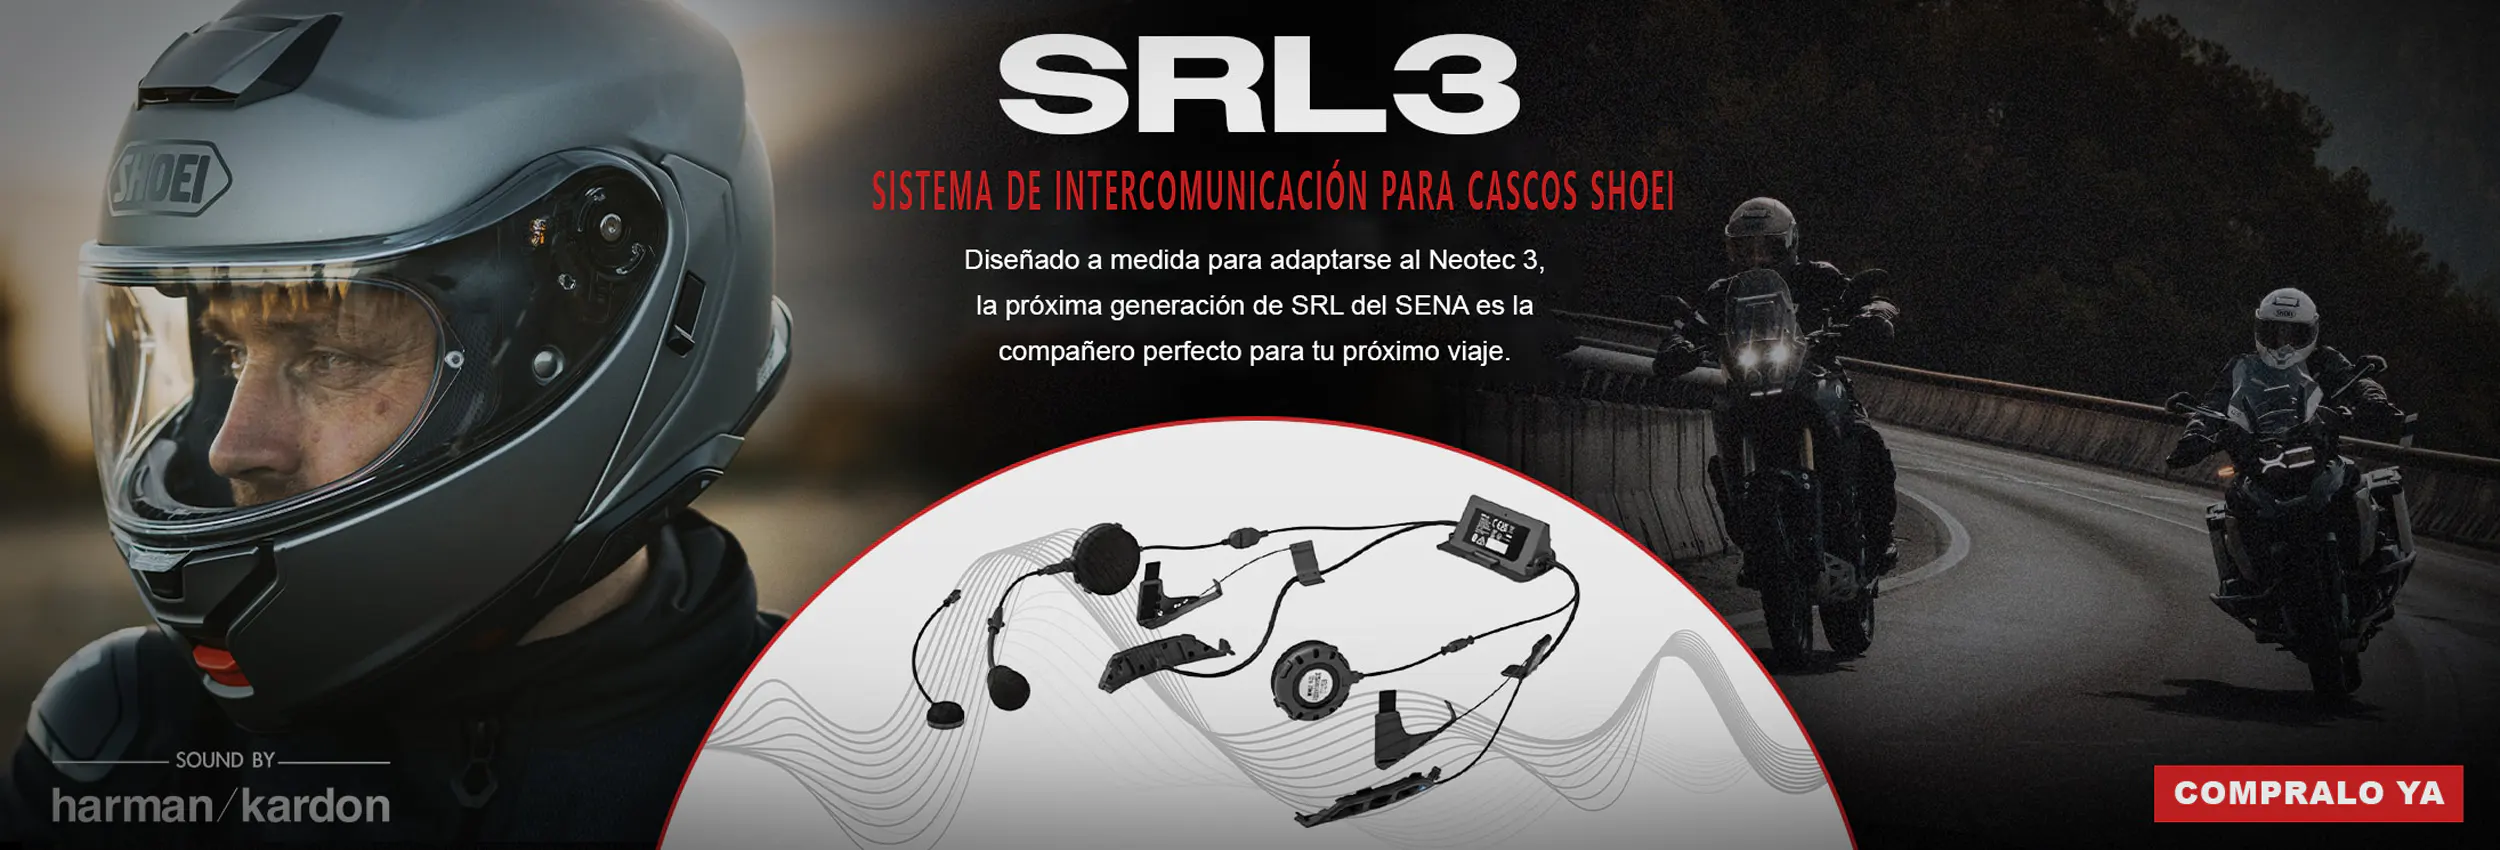 SENA-SRL3-Mesh-Moto Garage en Linea Home Page Slider